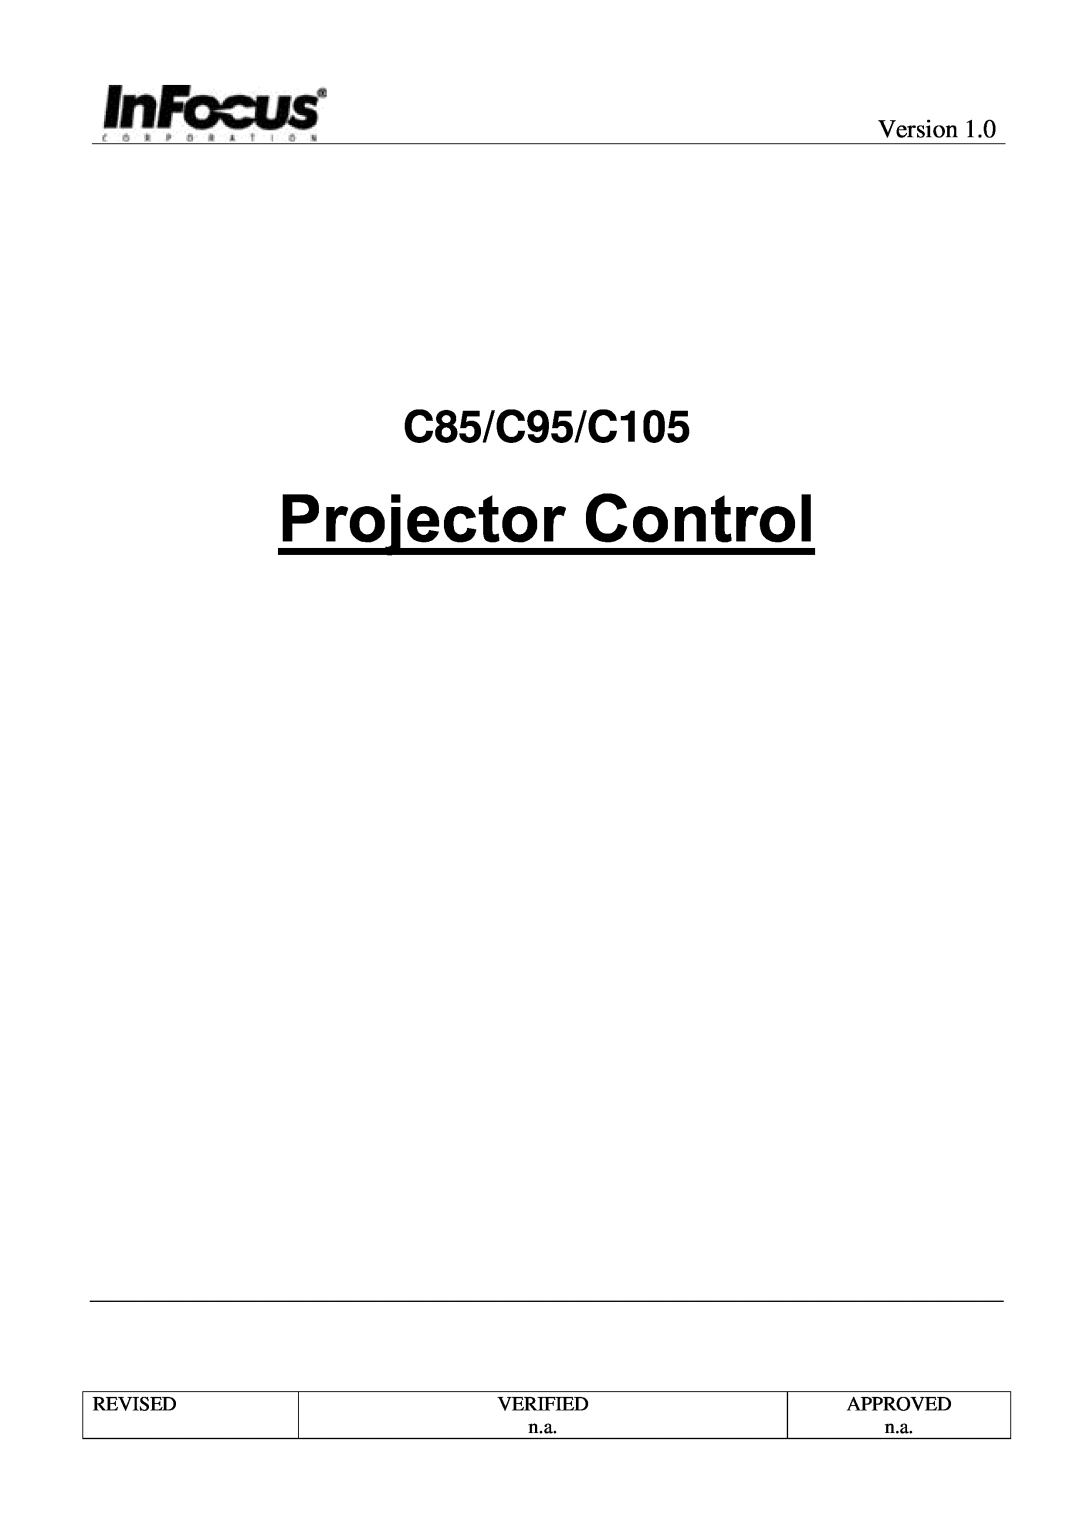 InFocus manual Revised, VERIFIED n.a, APPROVED n.a, C85/C95/C105, Version 